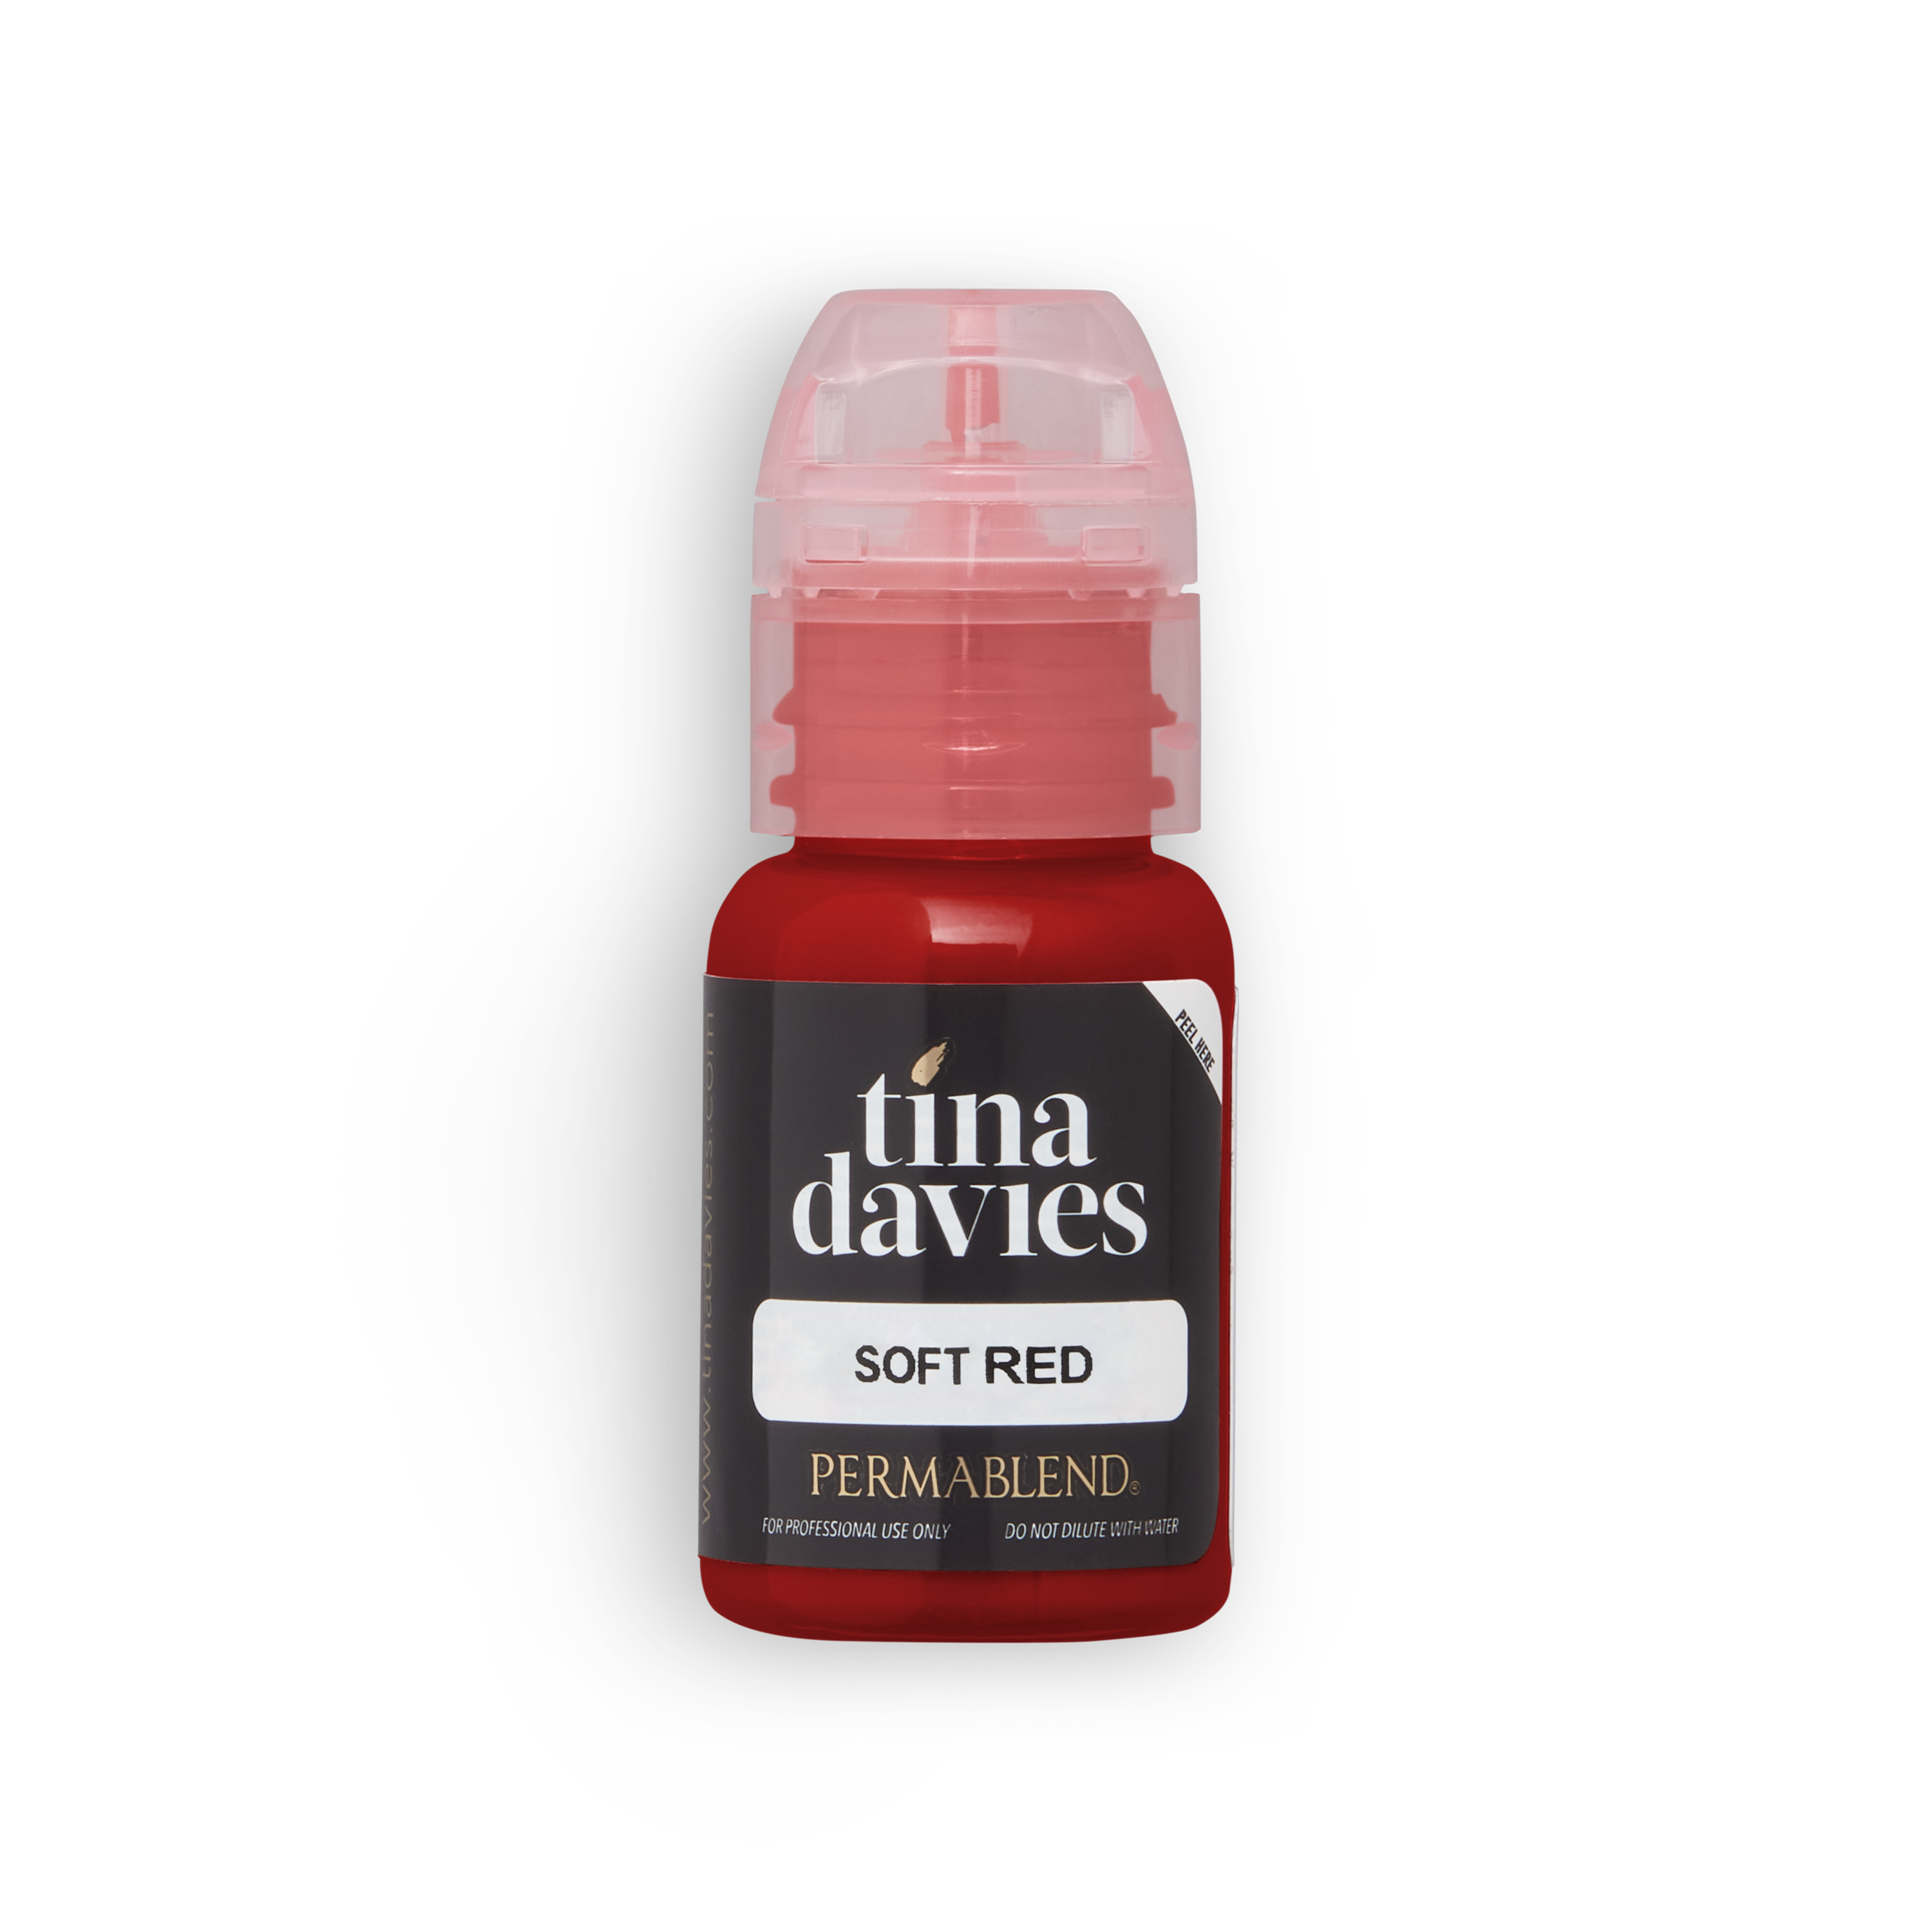 Soft Red pigment by Tina Davies, Permanent Makeup pigment, Perma Blend pigment, close up